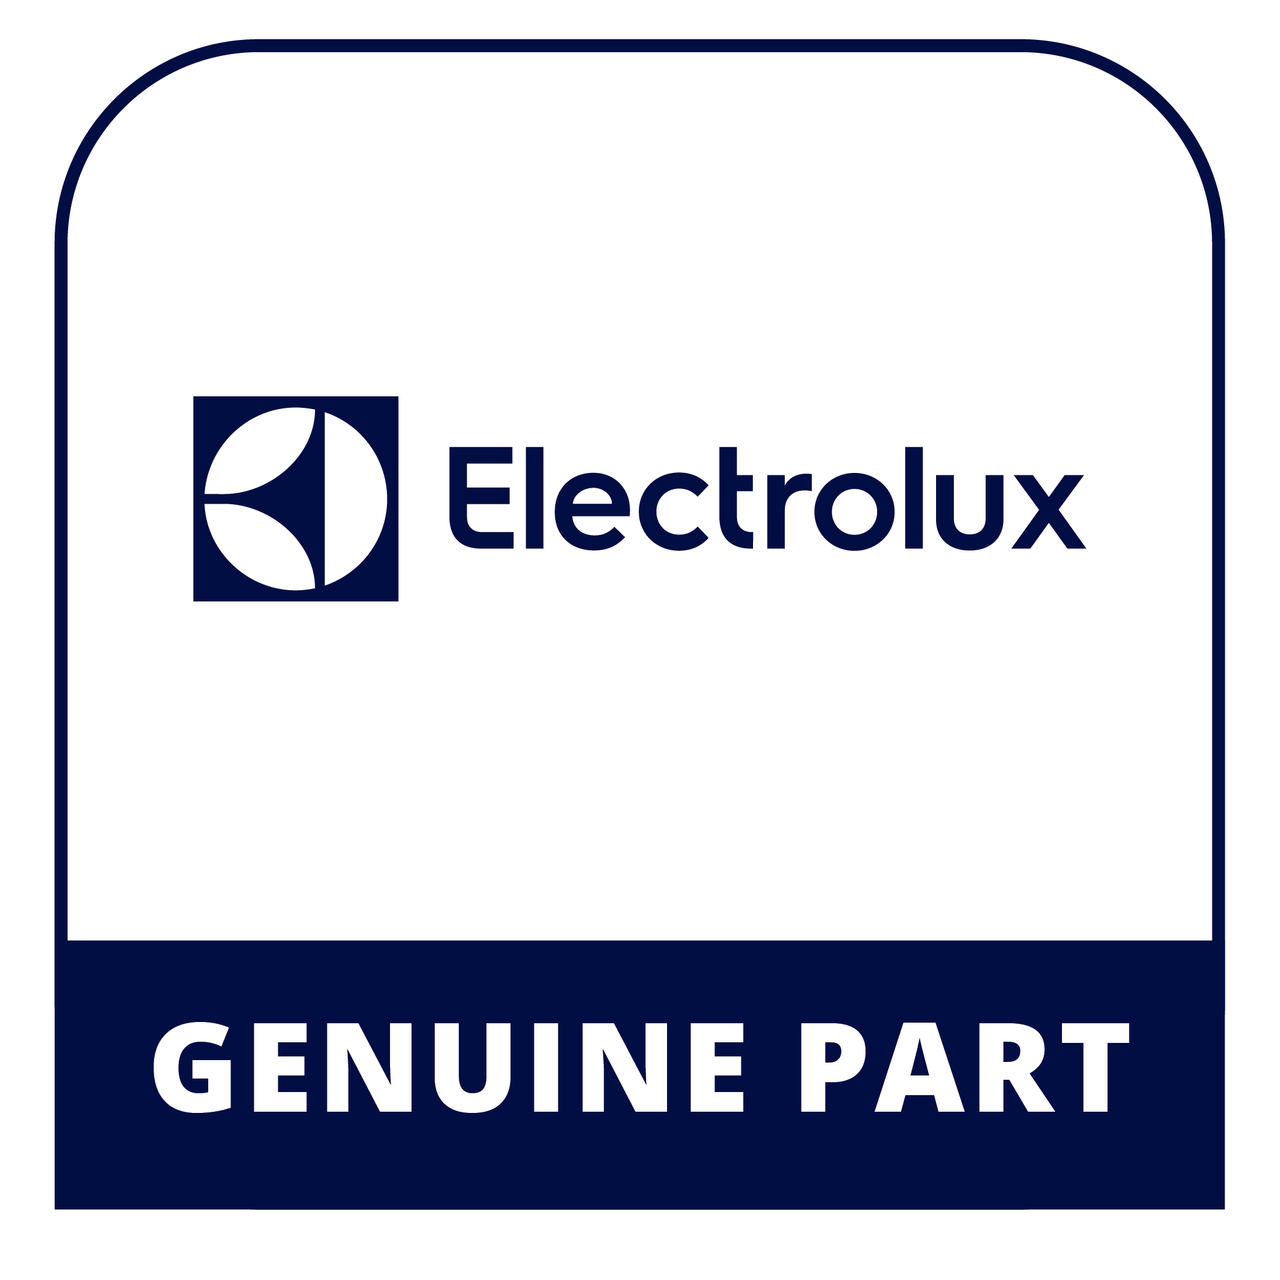 Frigidaire - Electrolux 316536613 Ignitor/Orifice Ass - Genuine Electrolux Part